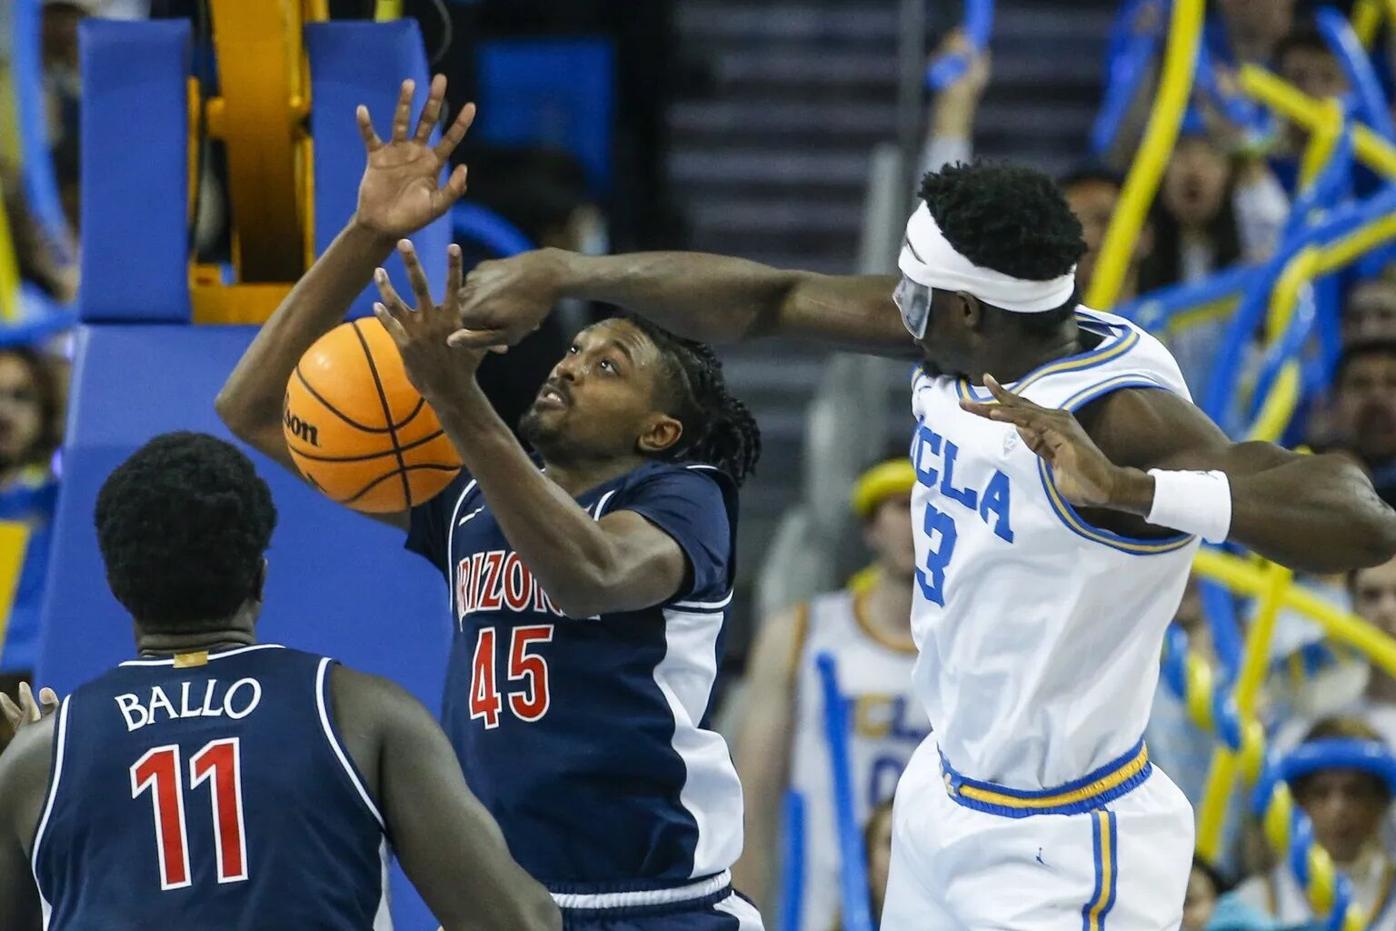 Adem Bona returning to UCLA basketball; Jaylen Clark leaving - Los Angeles  Times